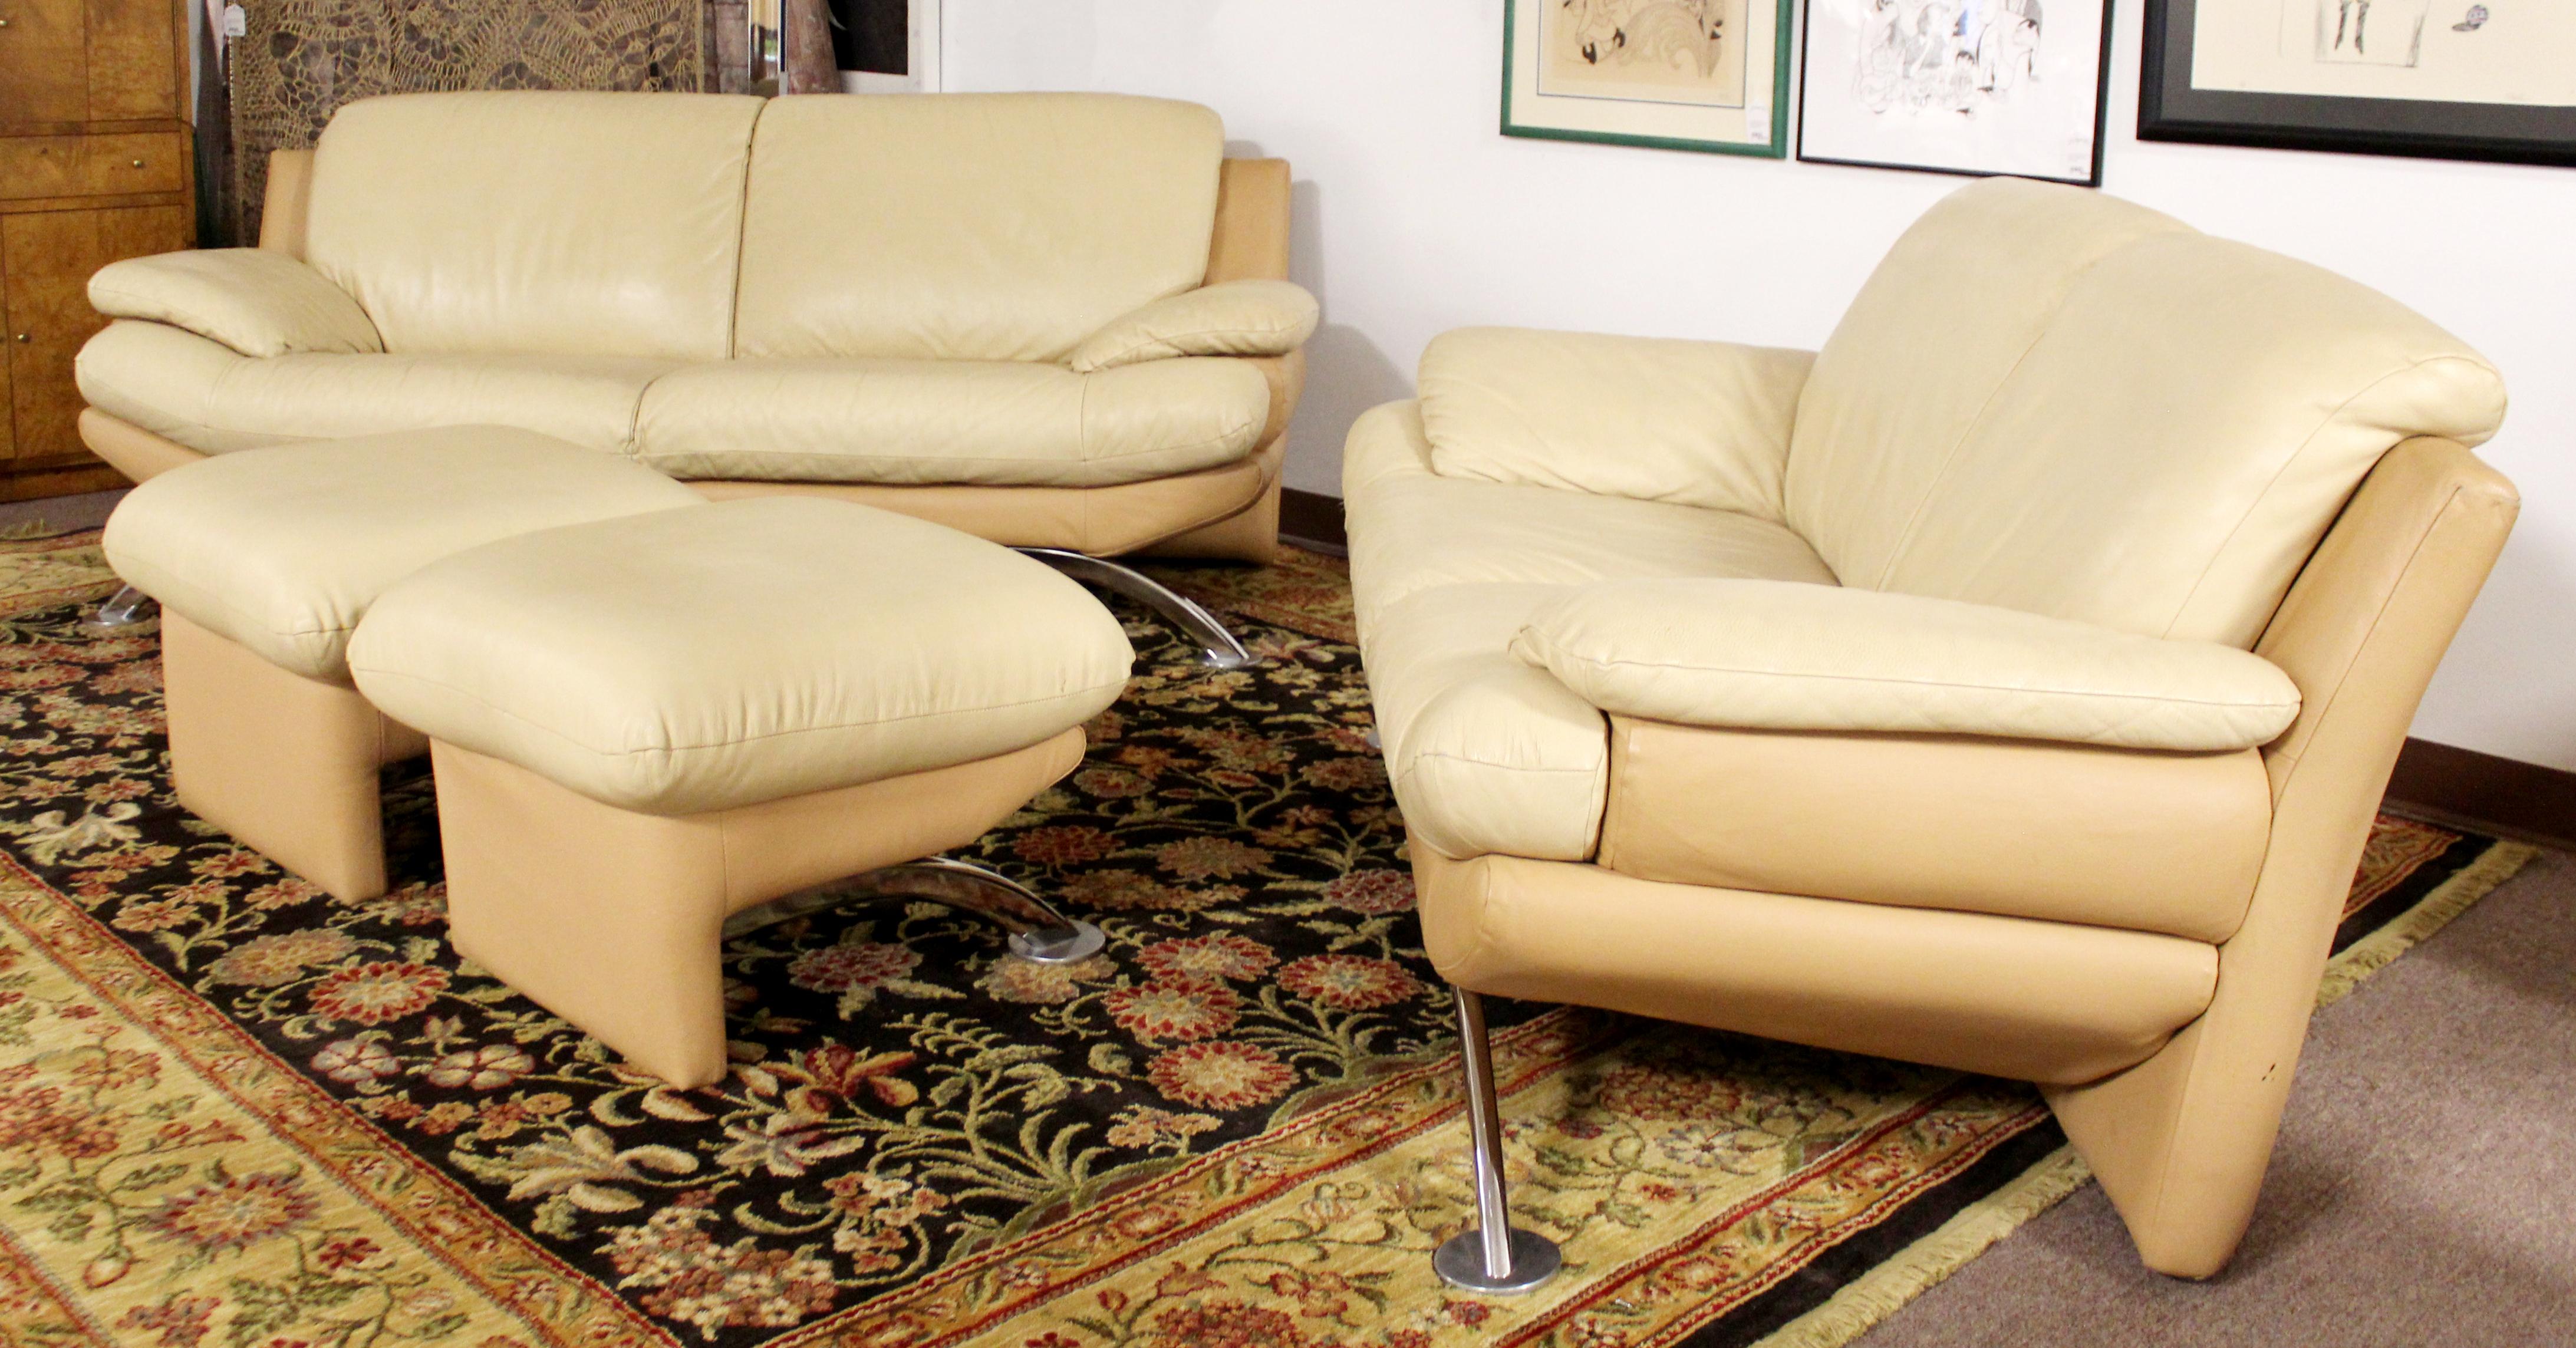 Late 20th Century Contemporary Modern Roche Bobois Leather Chrome Sofa & Loveseat Pair Ottoman Set